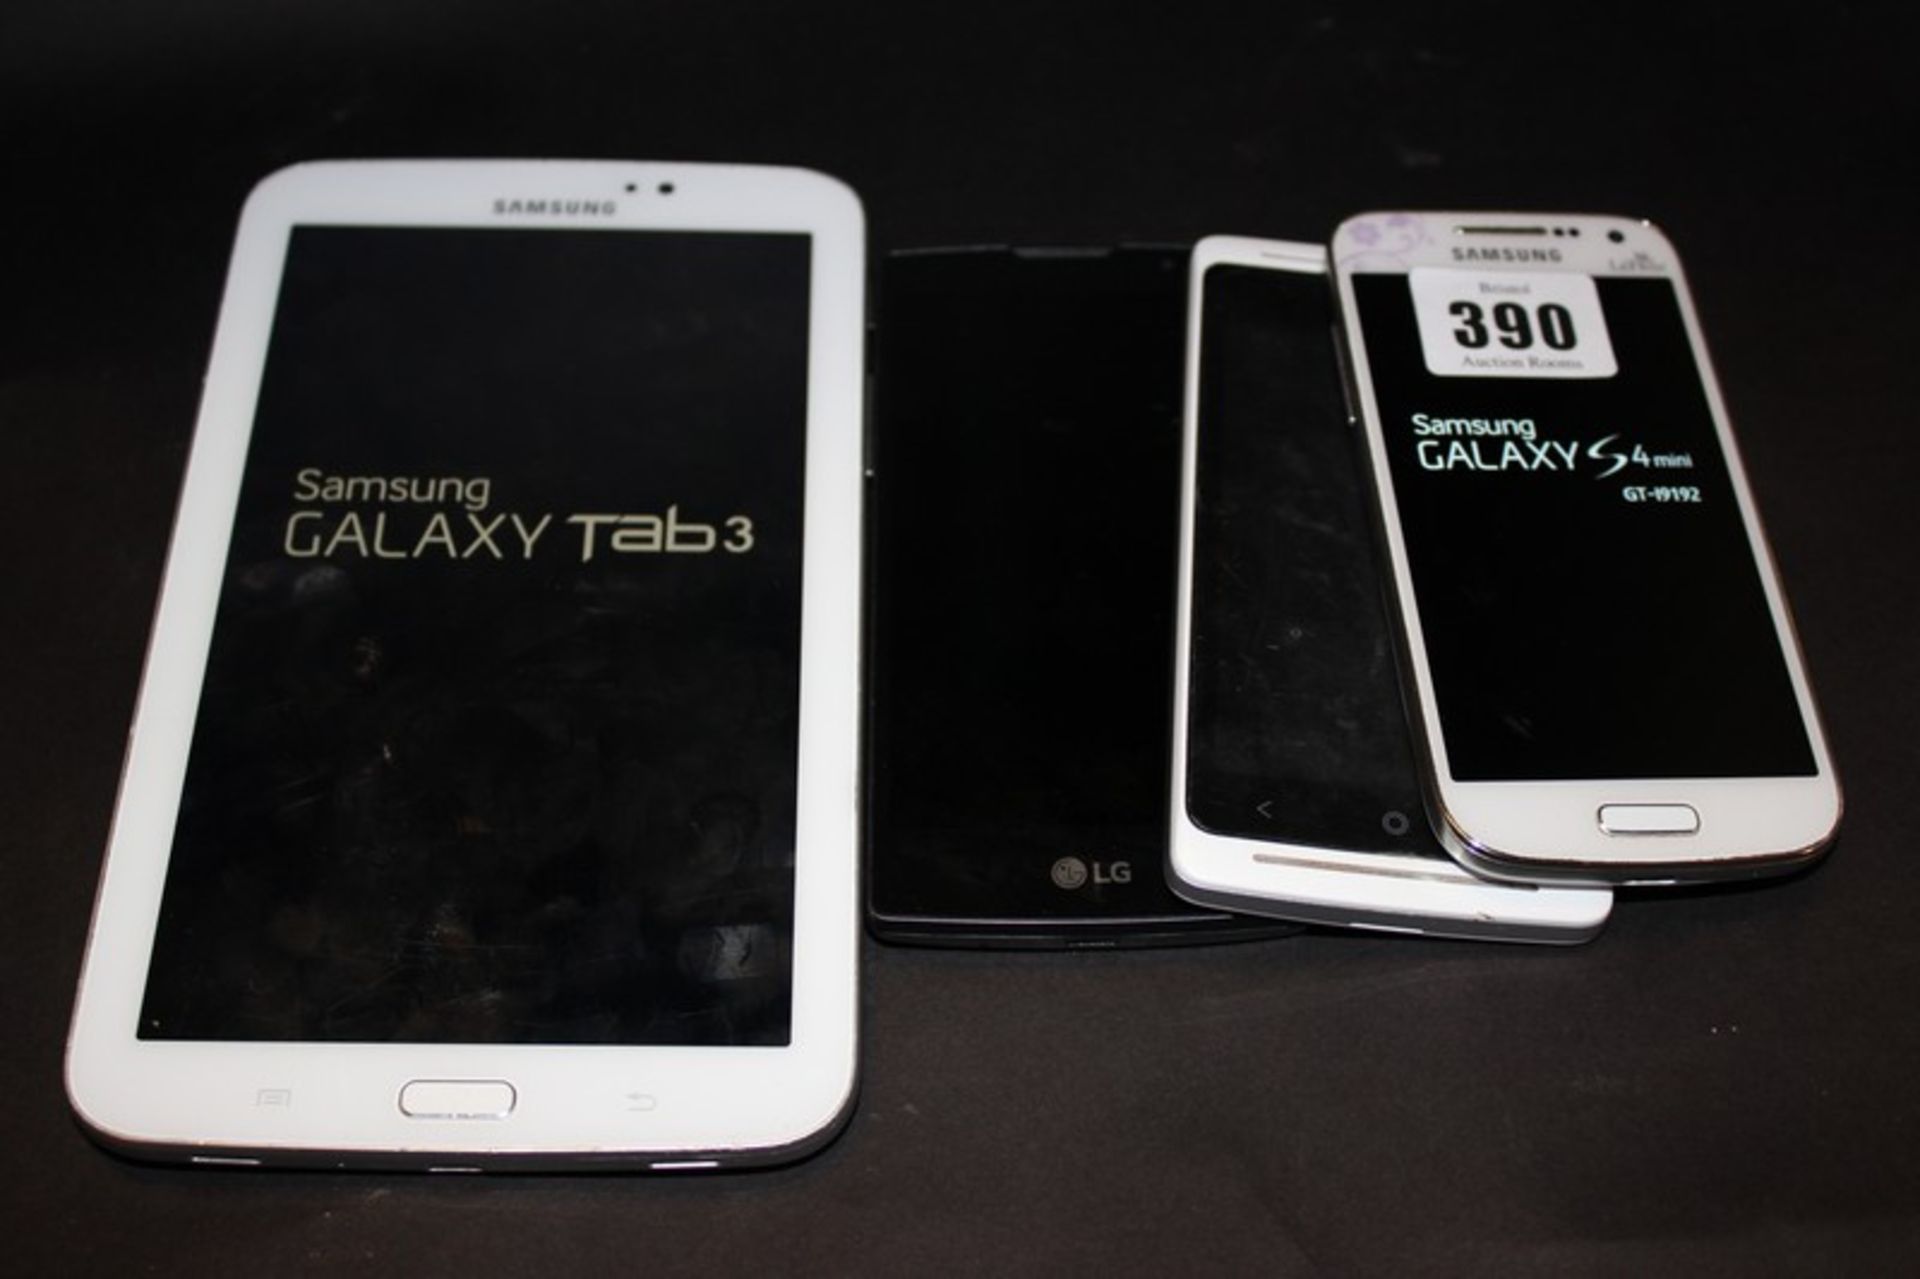 A Samsung Galaxy Tab 3 SM-T210, LG H440n imei: 358819067970344, Acer Liquid Z205 dual sim imei: